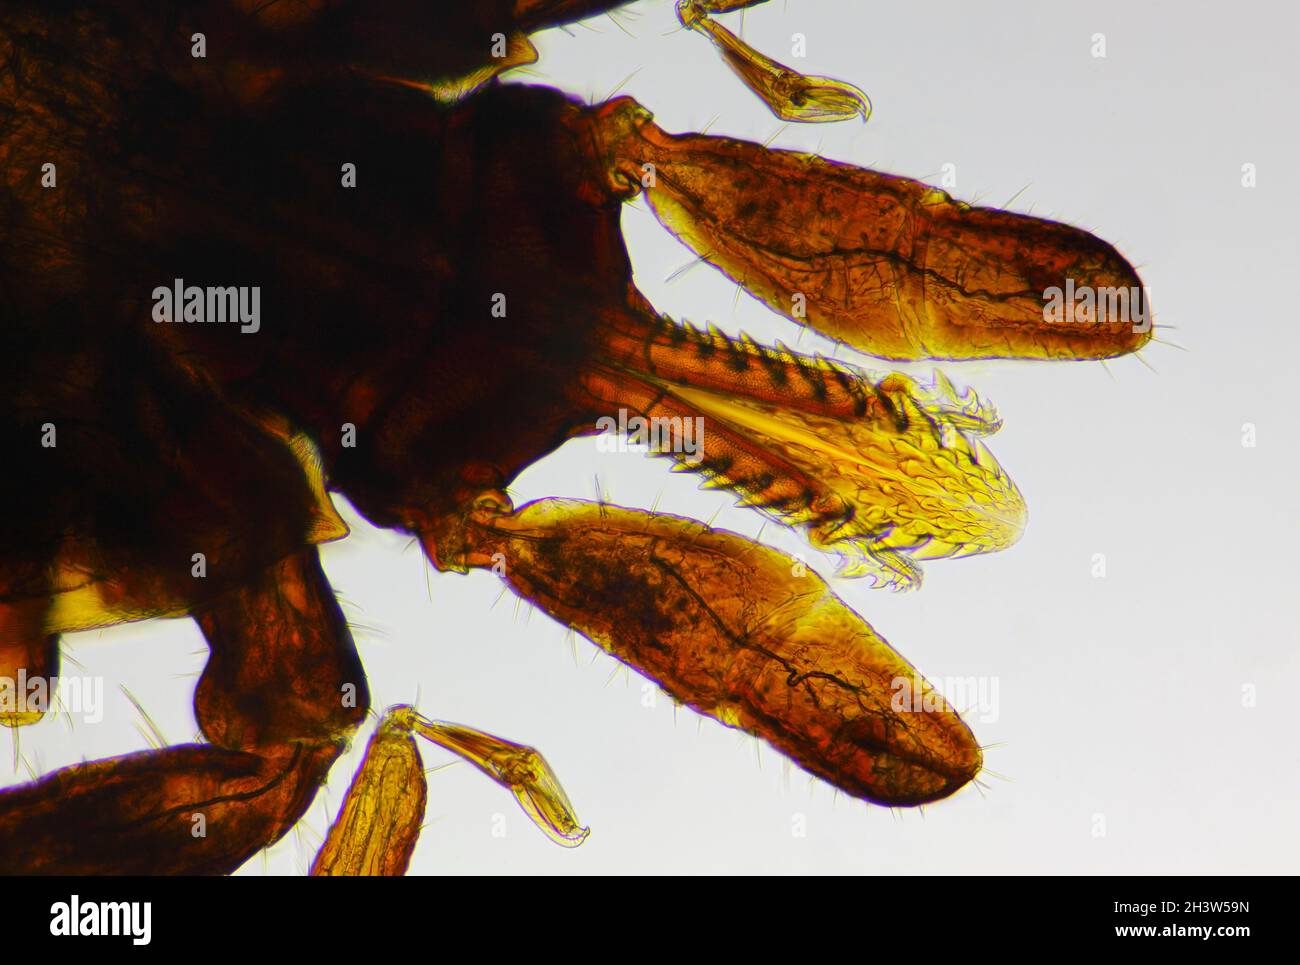 Microscopic view of a tick (Ixodidae, hard tick) head and mouth. Brightfield illumination. Stock Photo